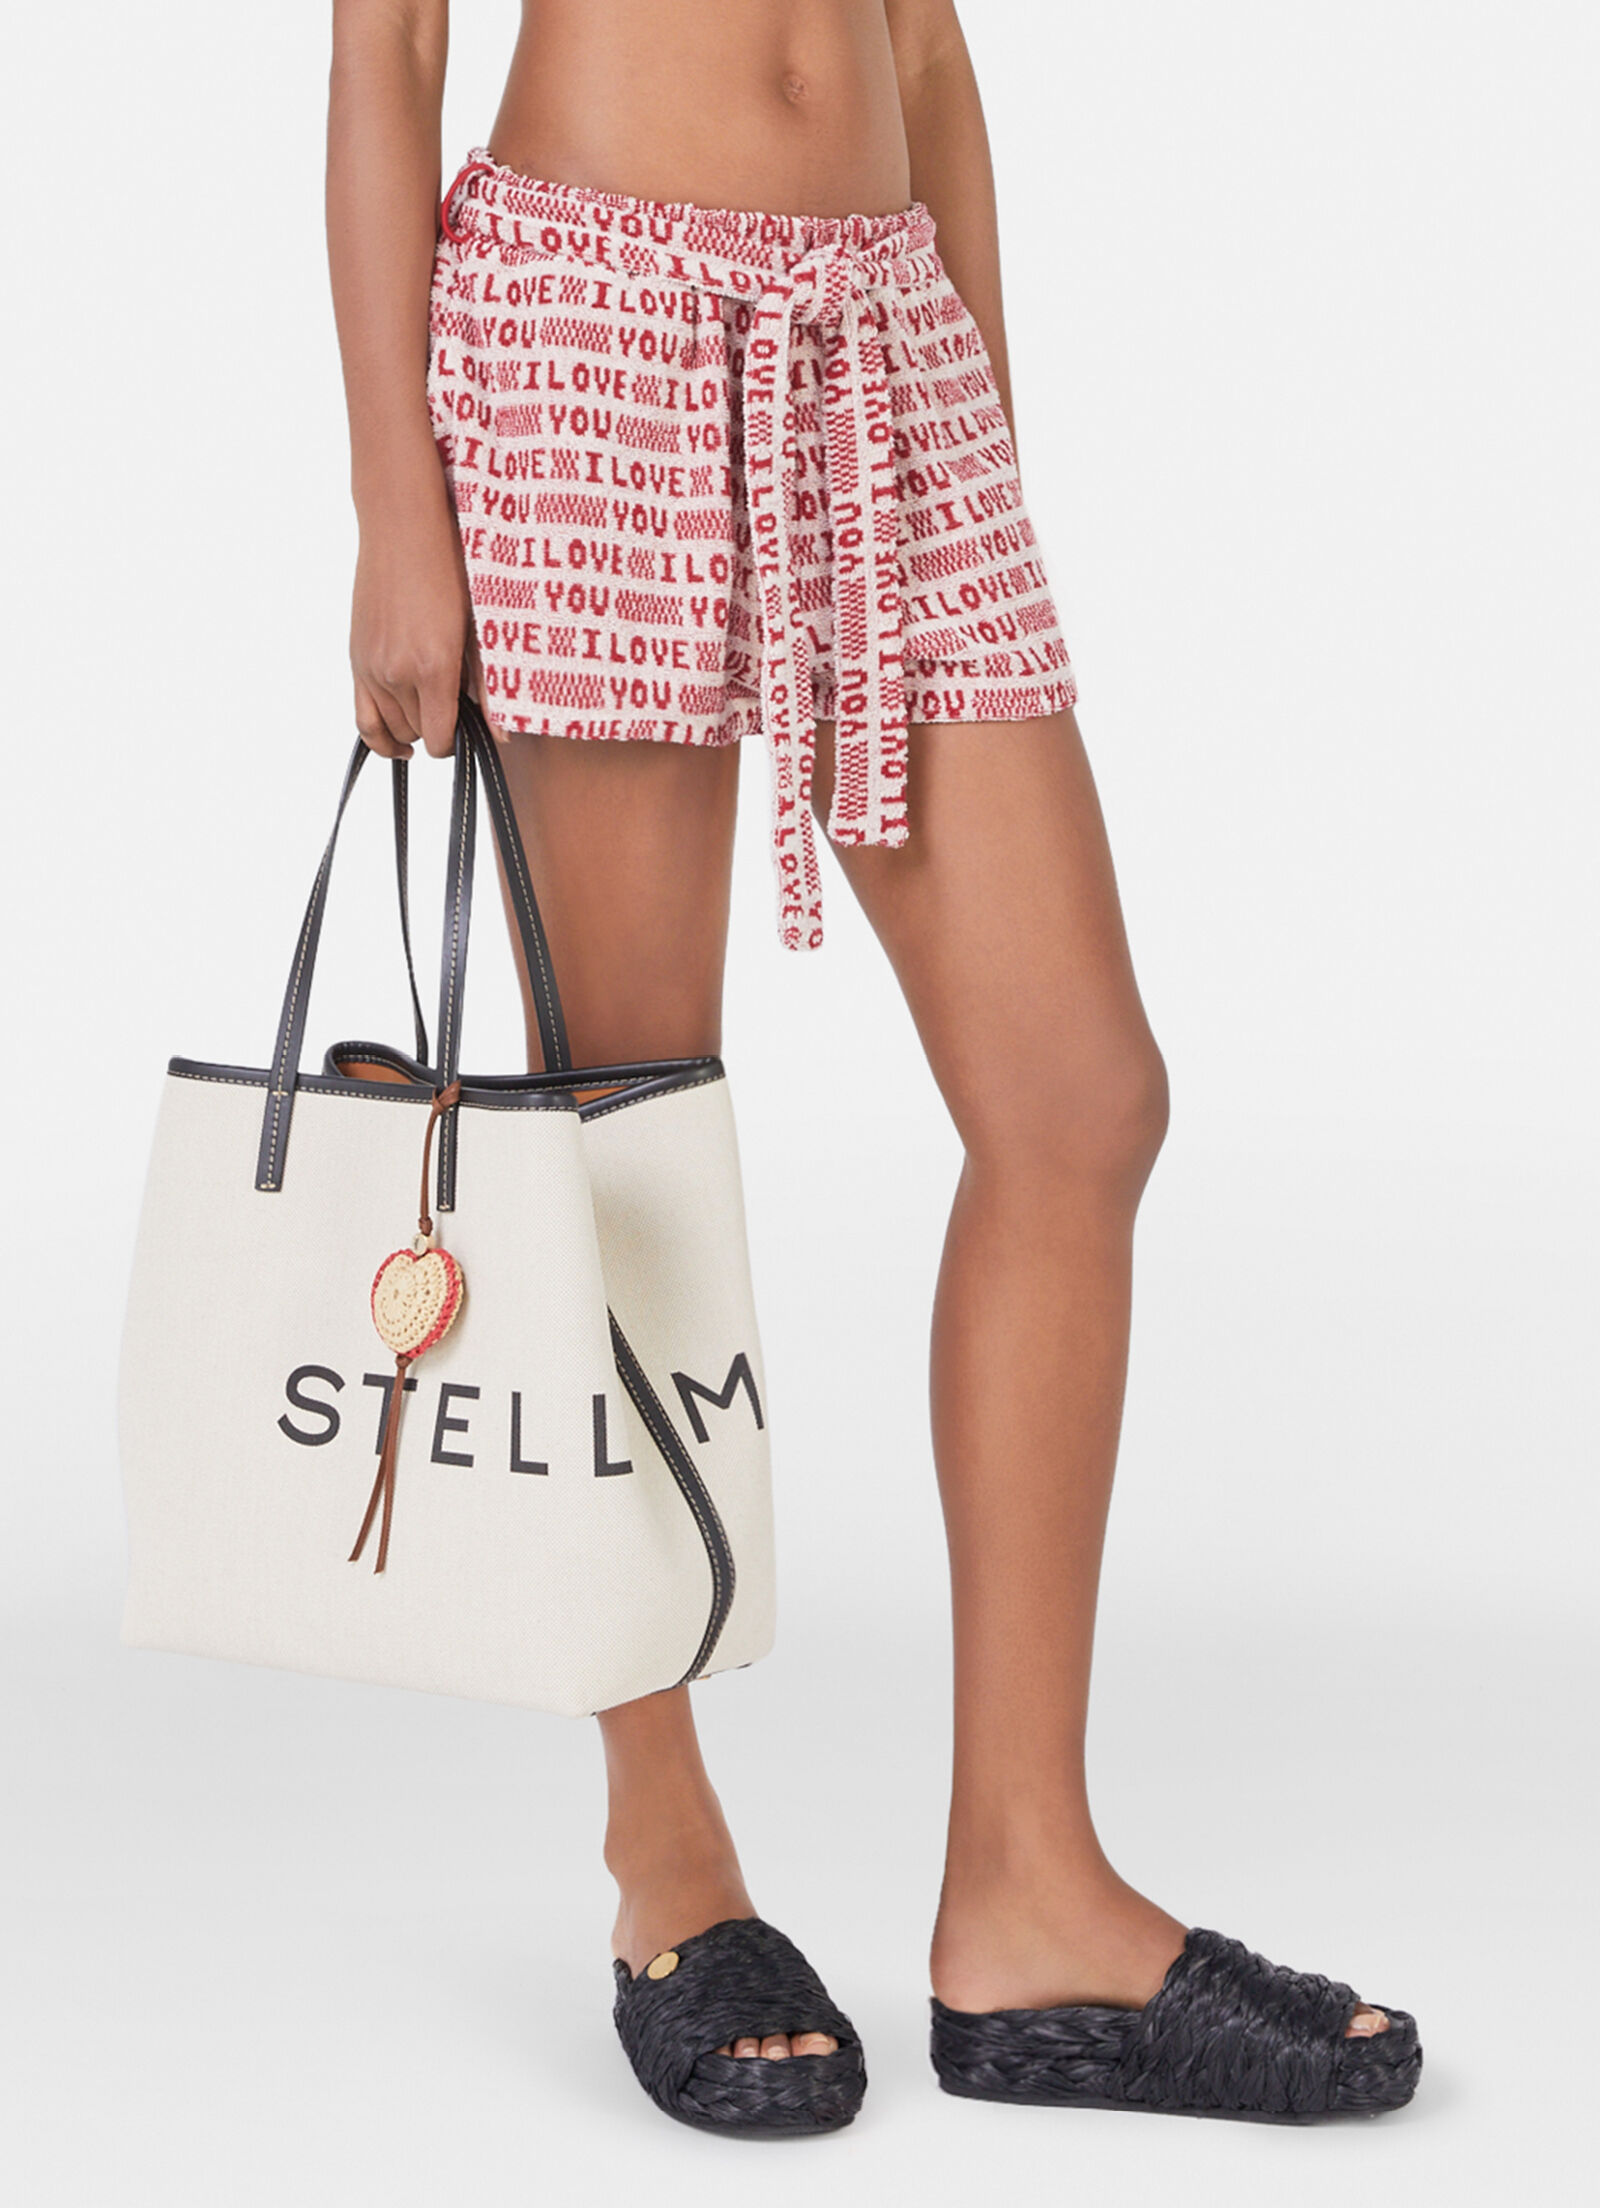 Stella McCartney Summer Loving 2023 Capsule Collection | Stella